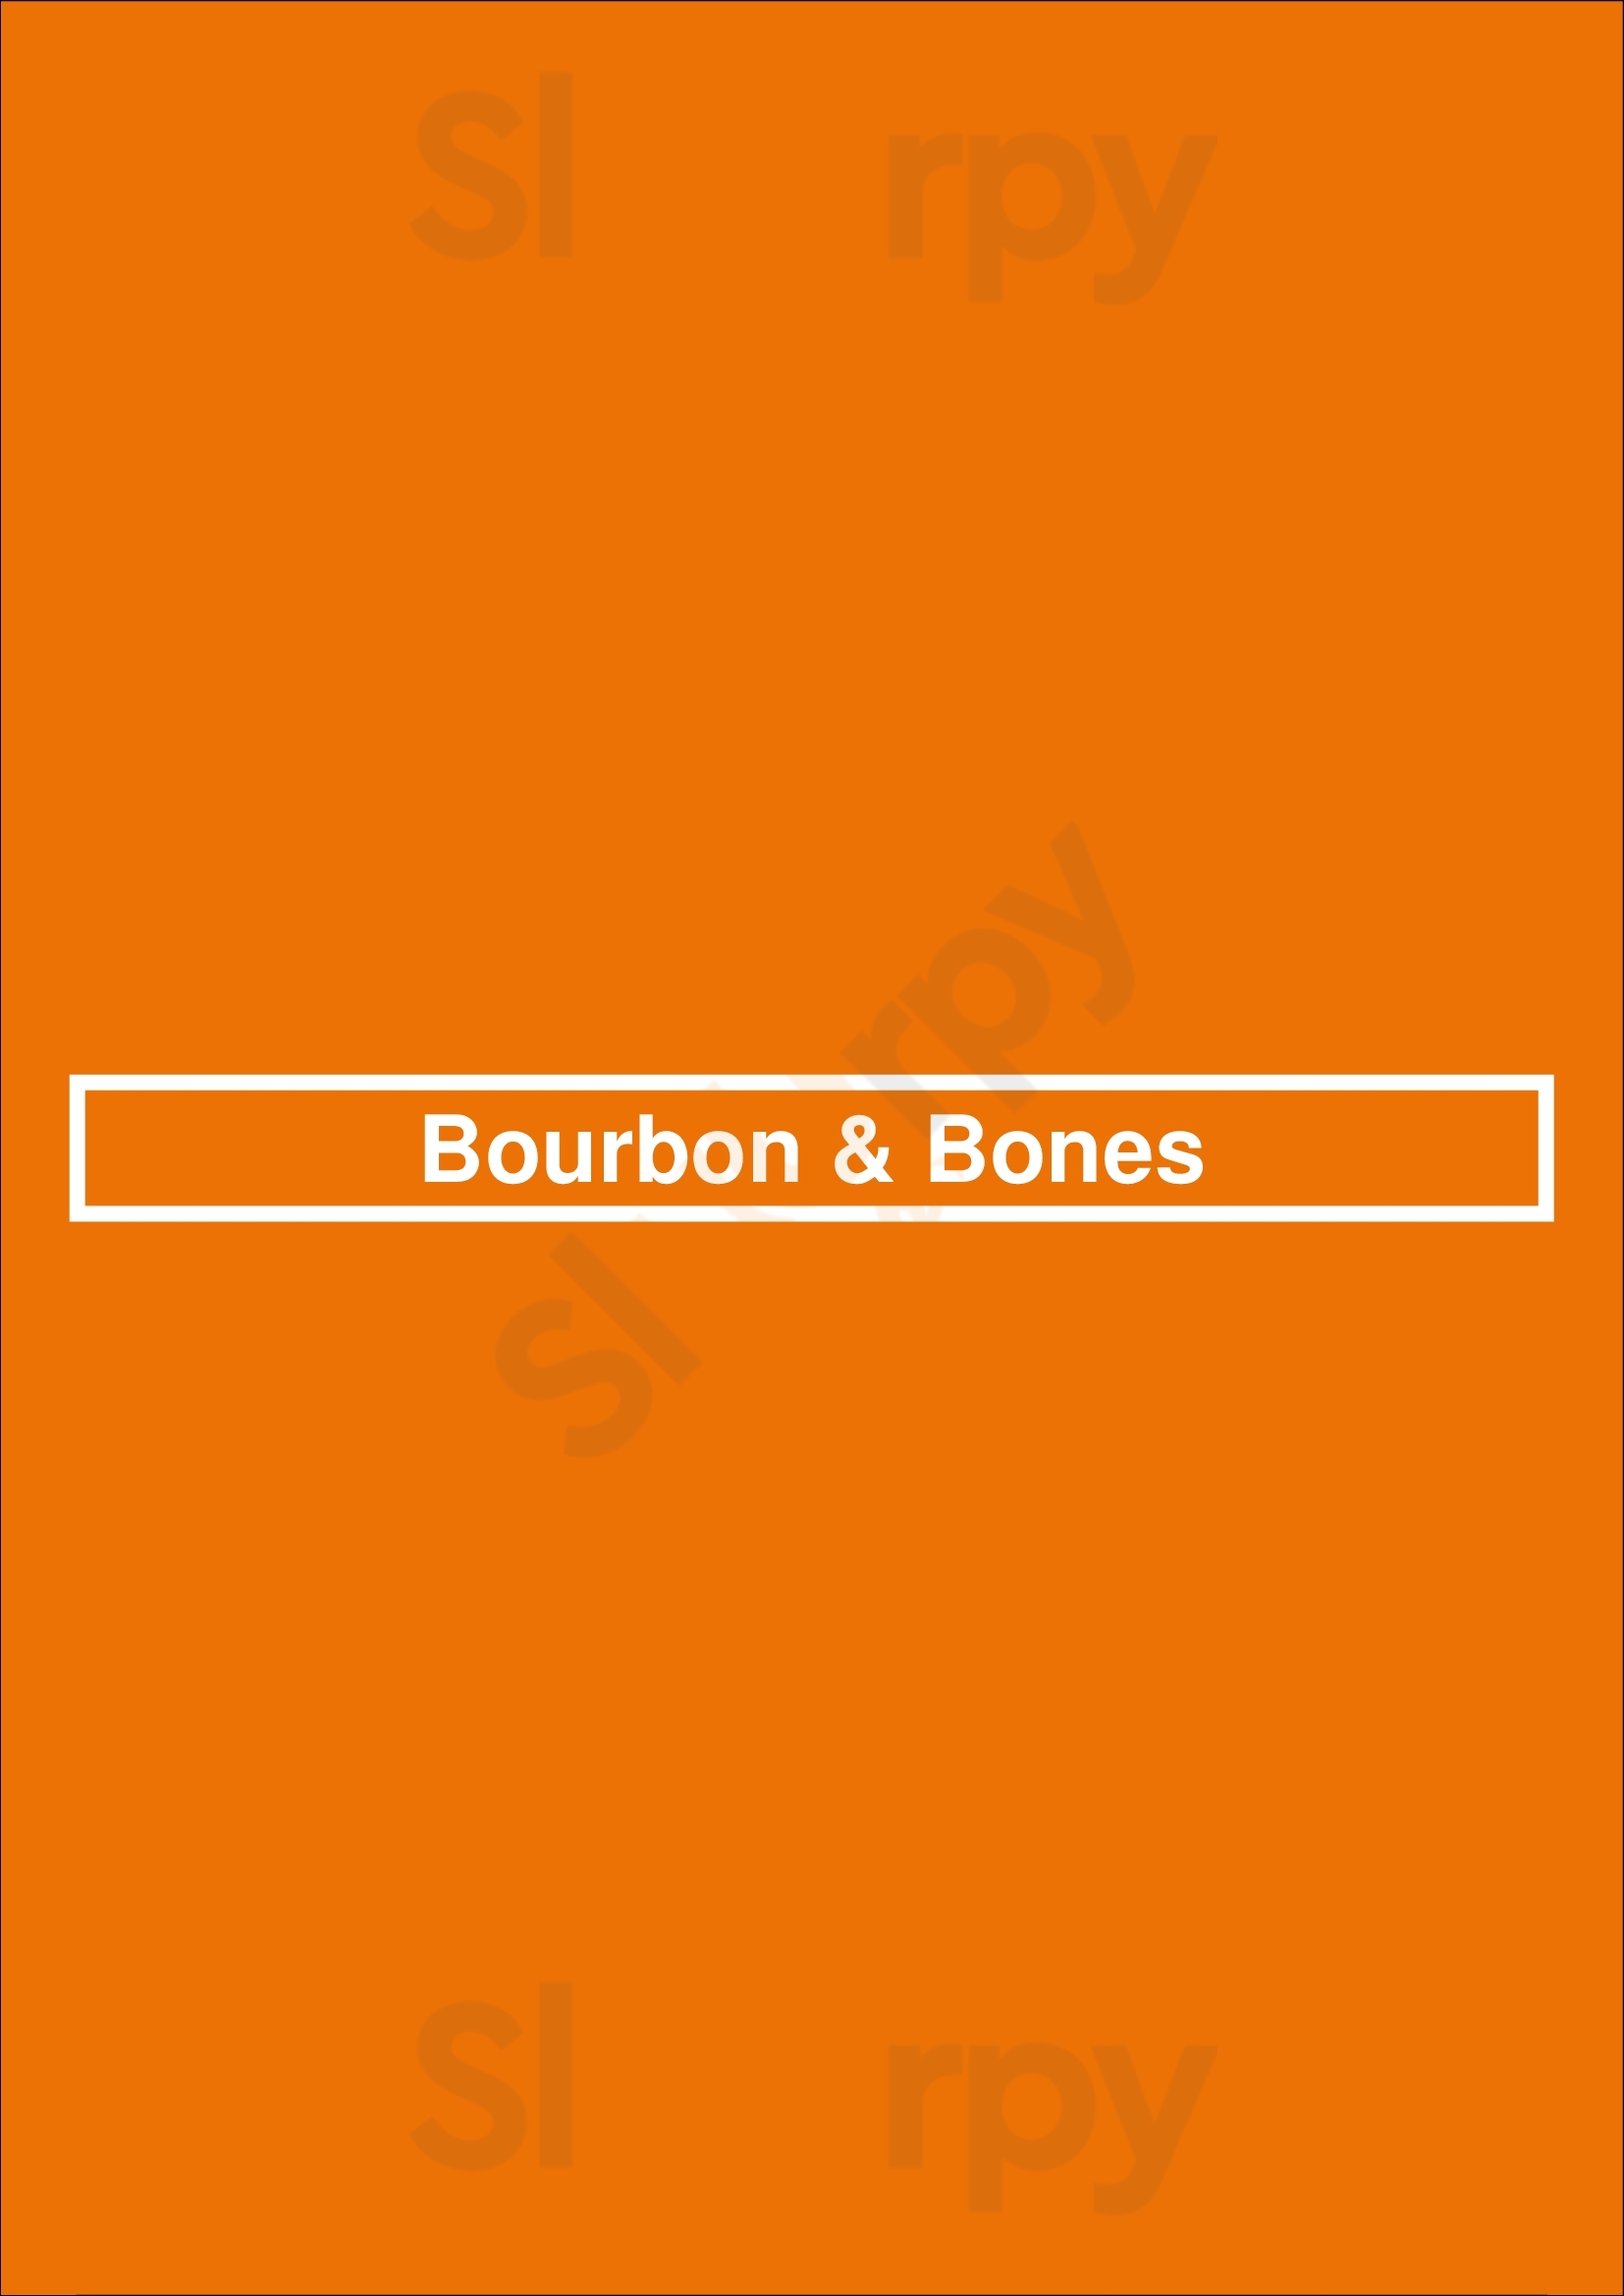 Bourbon & Bones Scottsdale Menu - 1